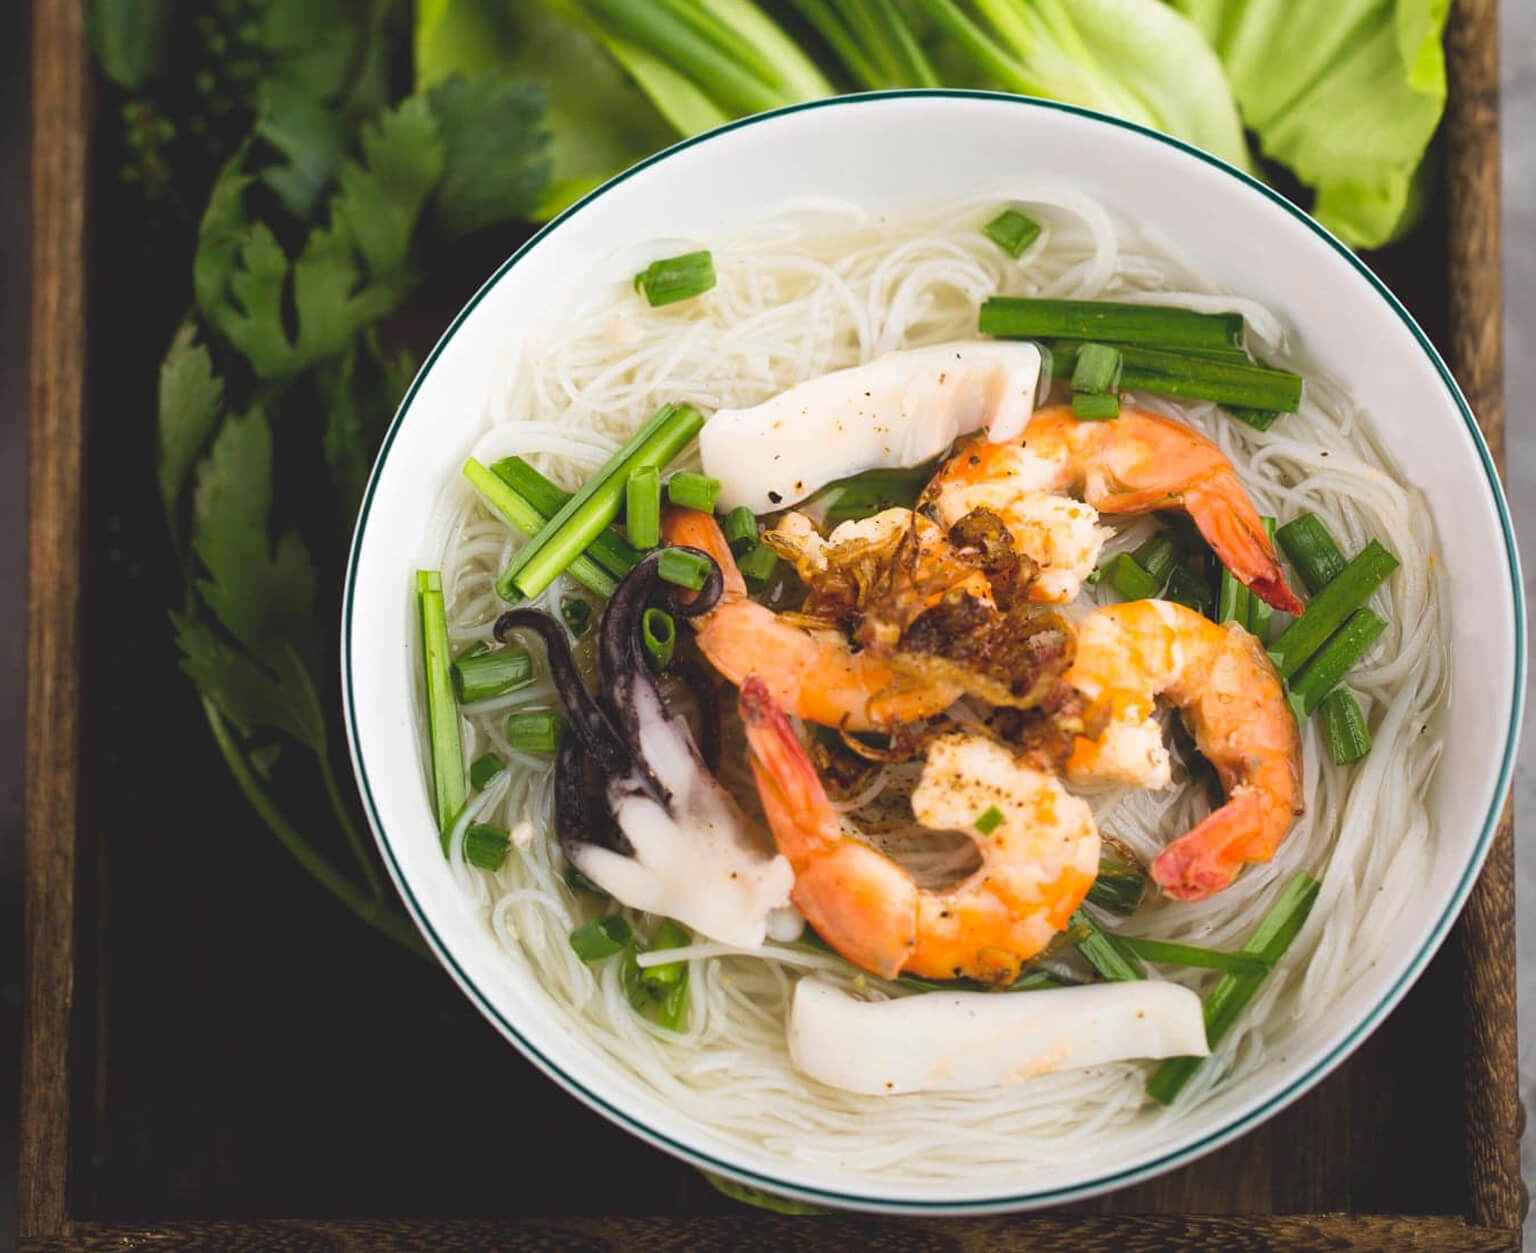 Hu Tieu – A popular dish in Southern Vietnam